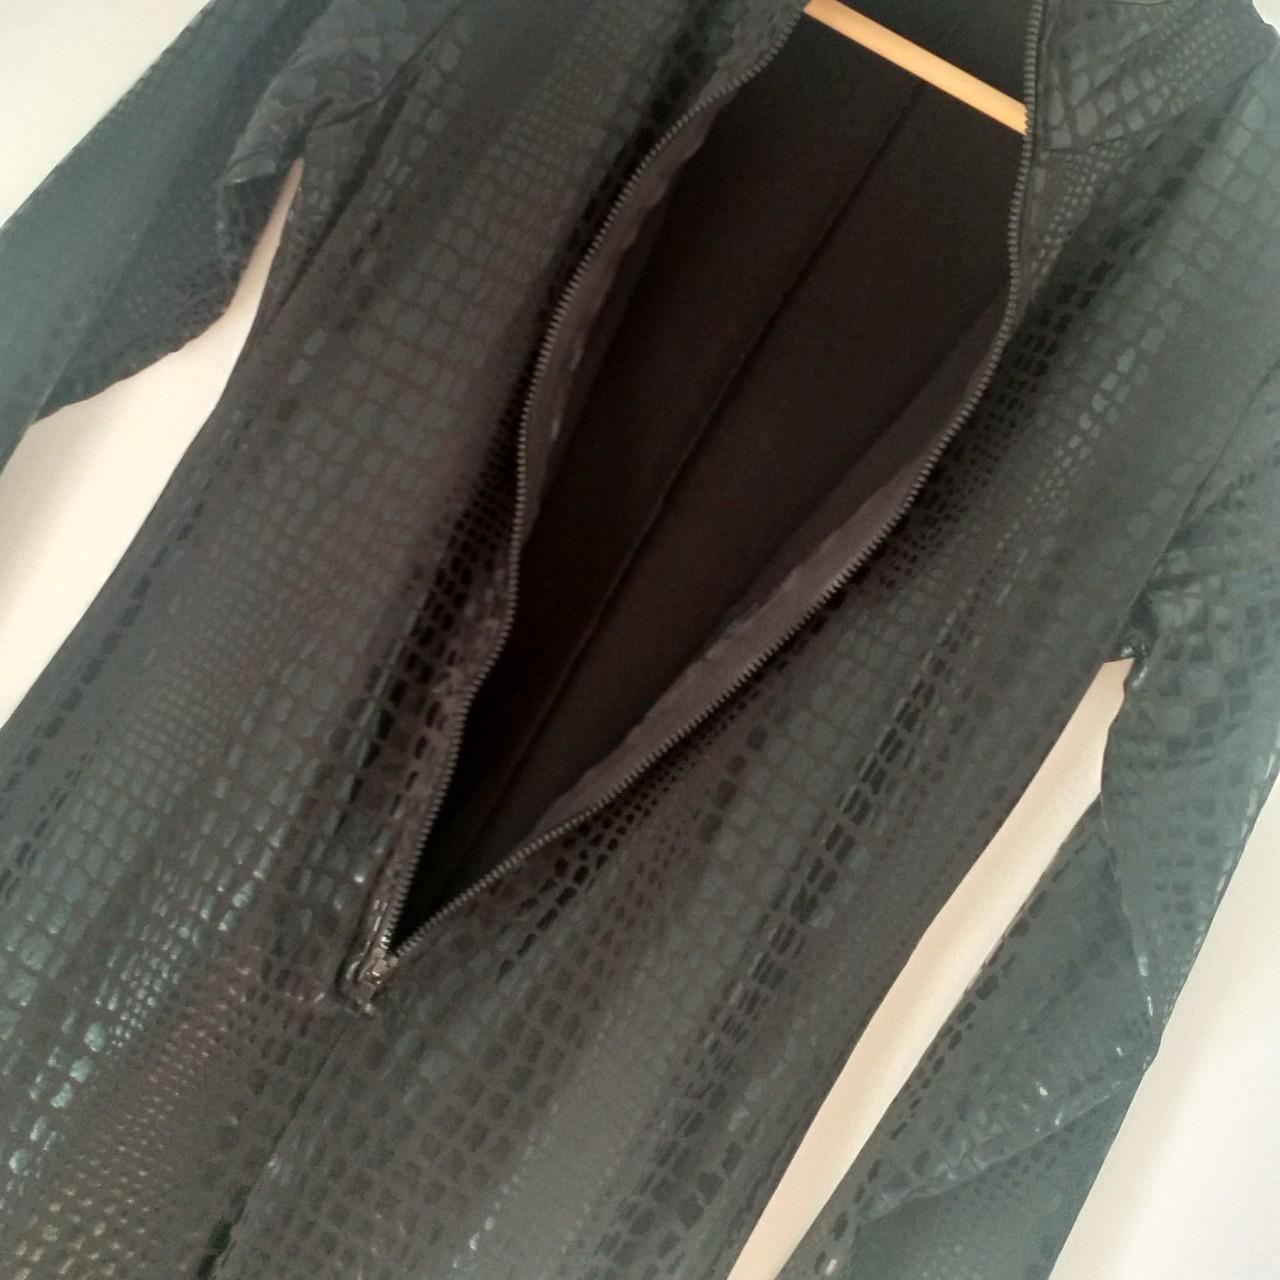 Black bodysuit // Catsuit with front zipper, this is... - Depop